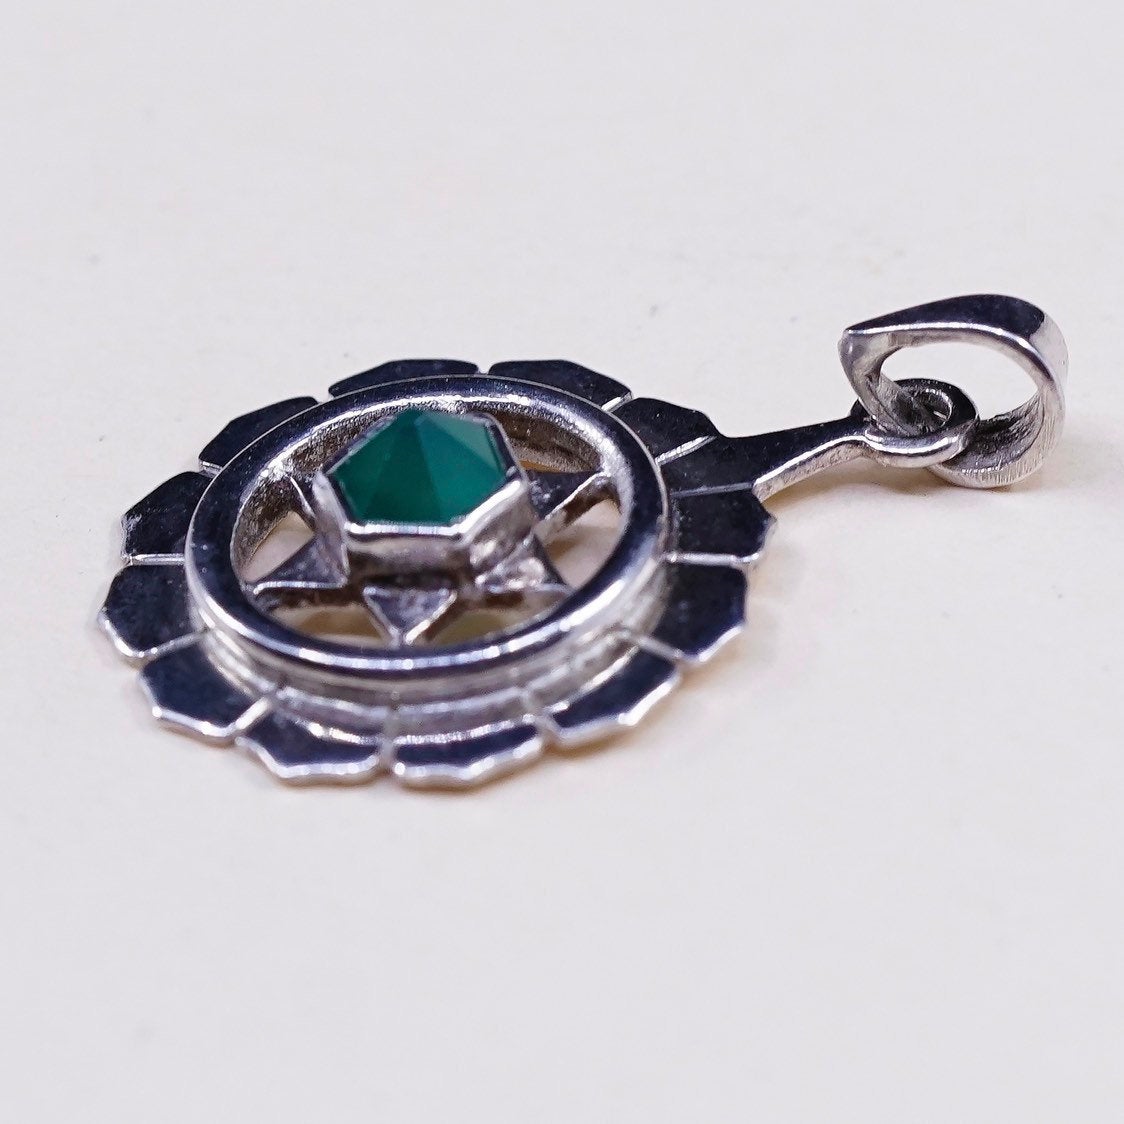 VTG handmade Sterling silver pendant, 925 silver hexagram with peridot inlay